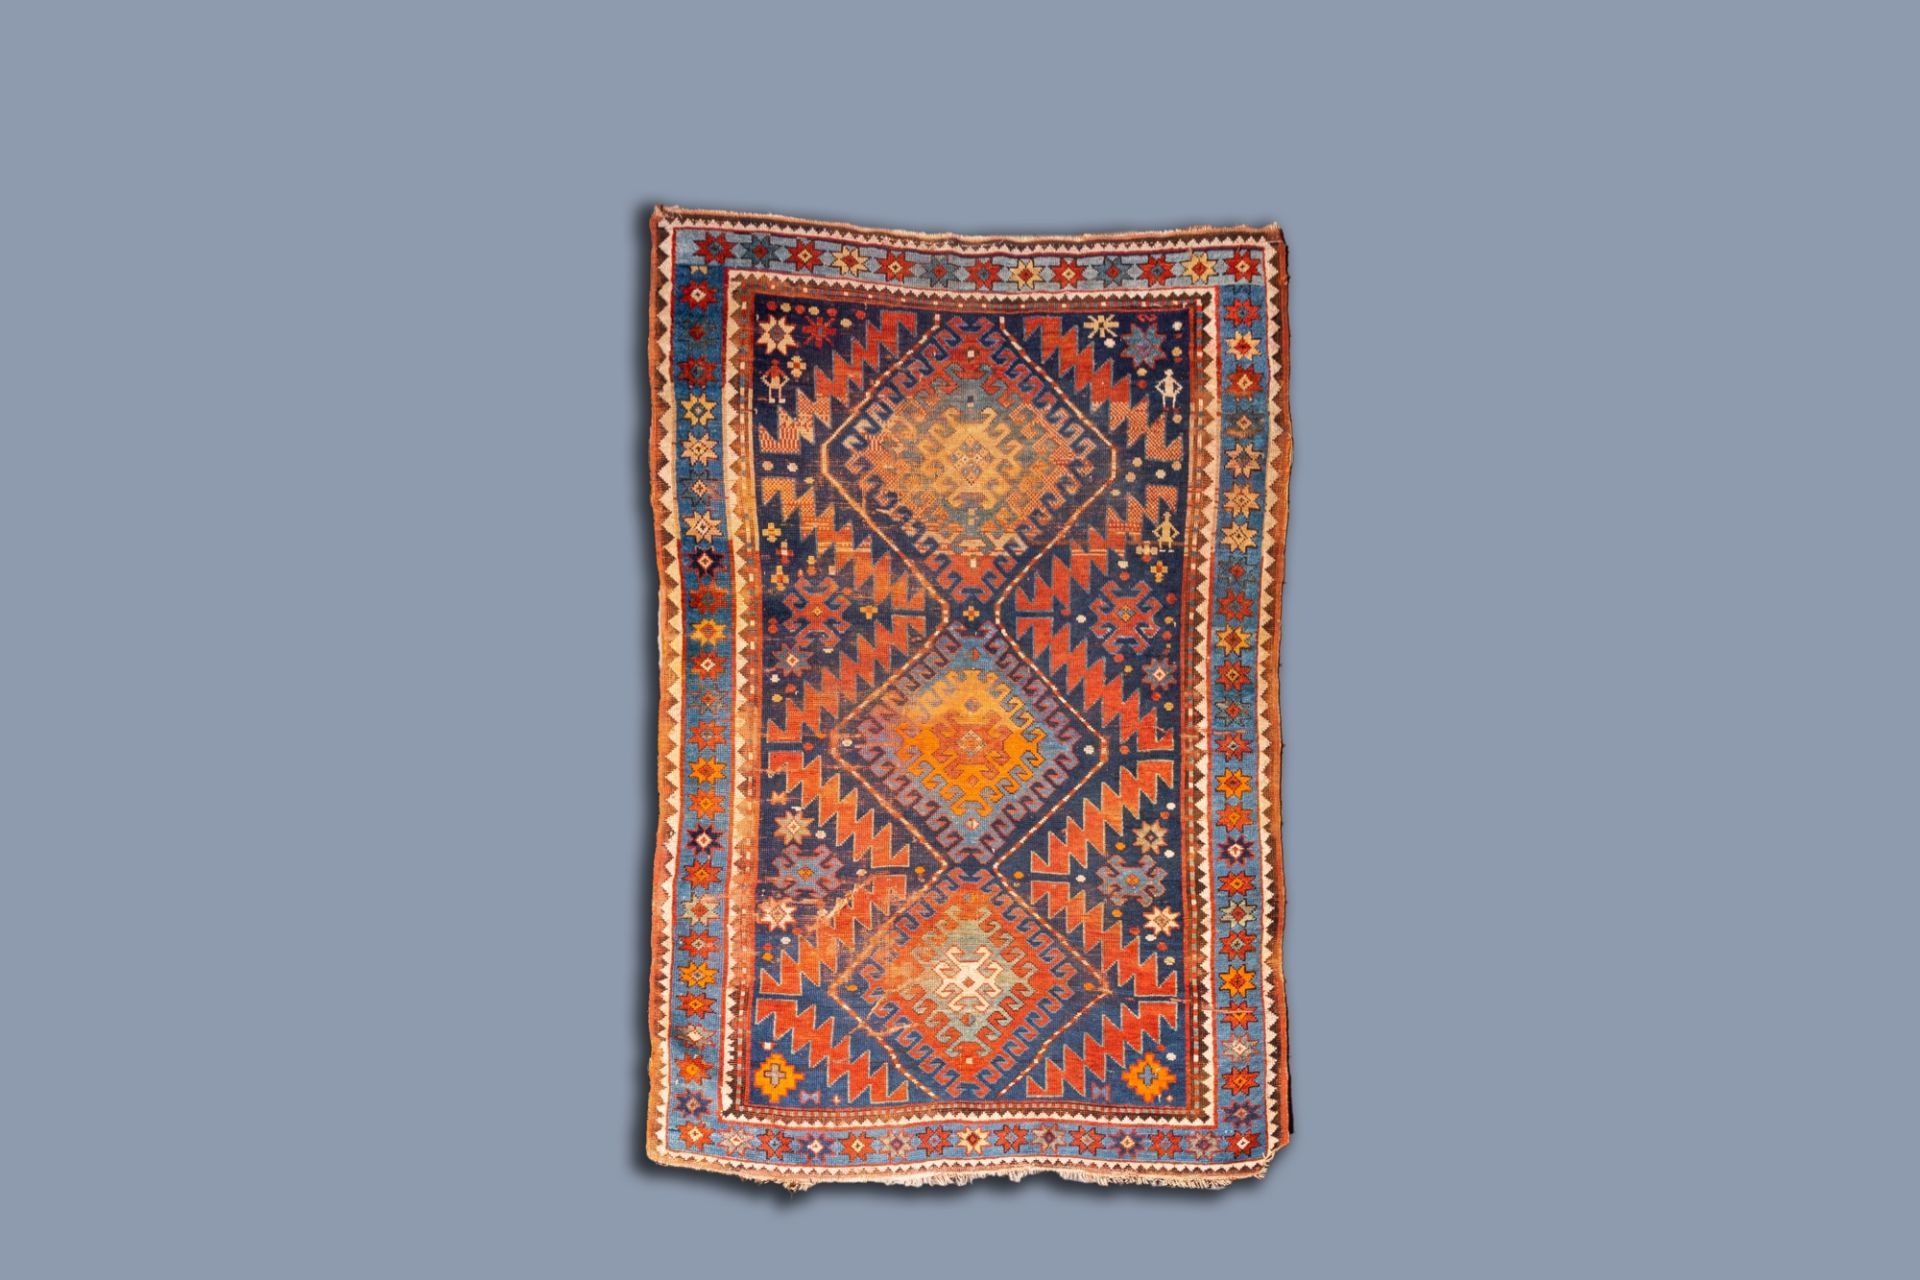 A Caucasian Karabagh rug, wool on cotton, 19th C.